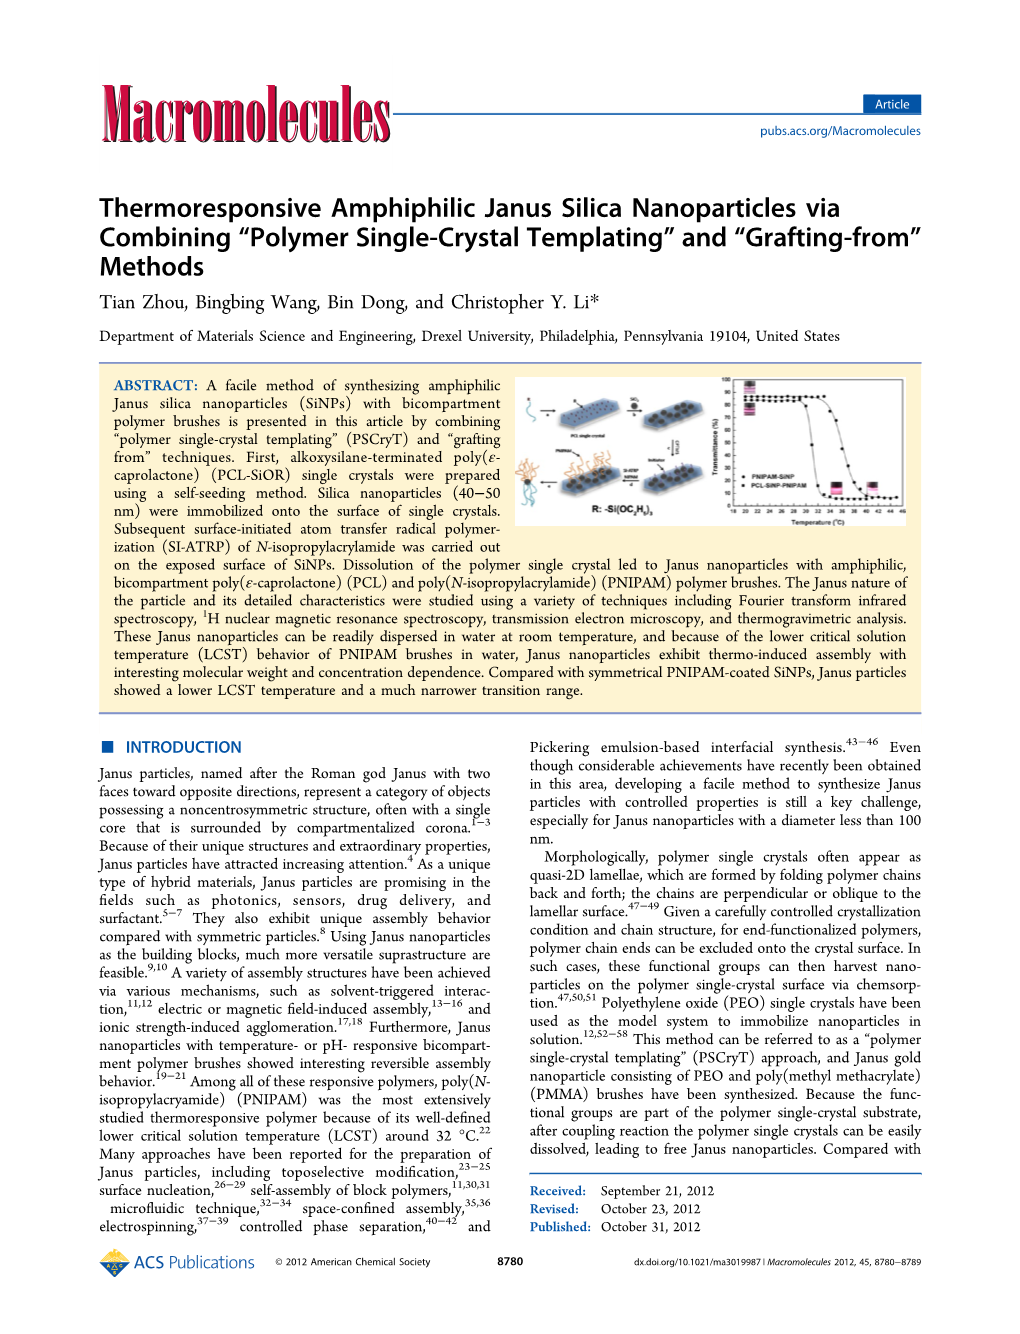 Thermoresponsive Amphiphilic Janus Silica Nanoparticles Via Combining